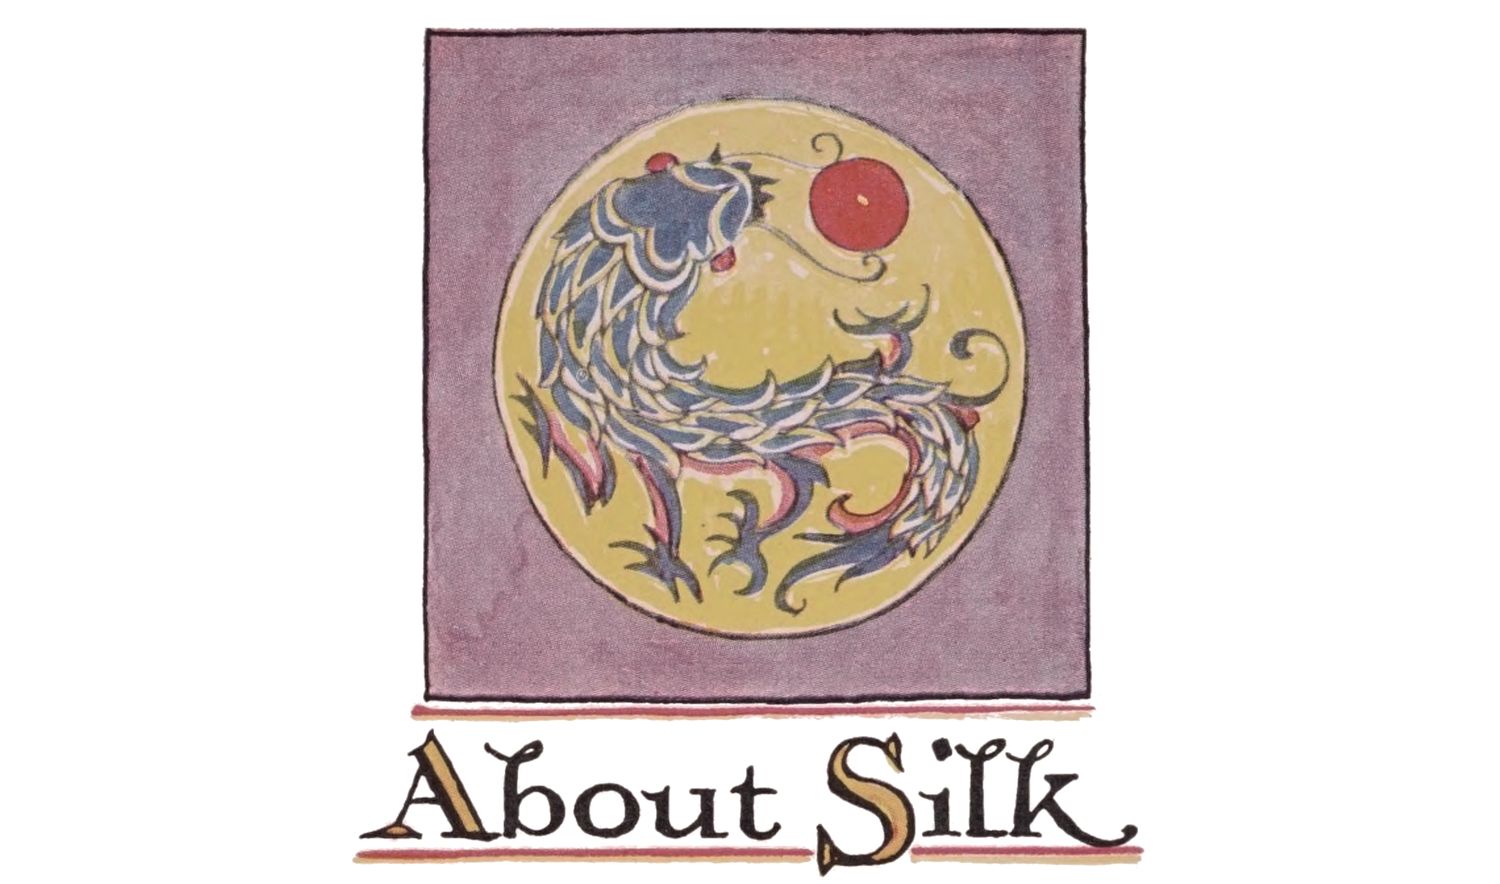 About Silk